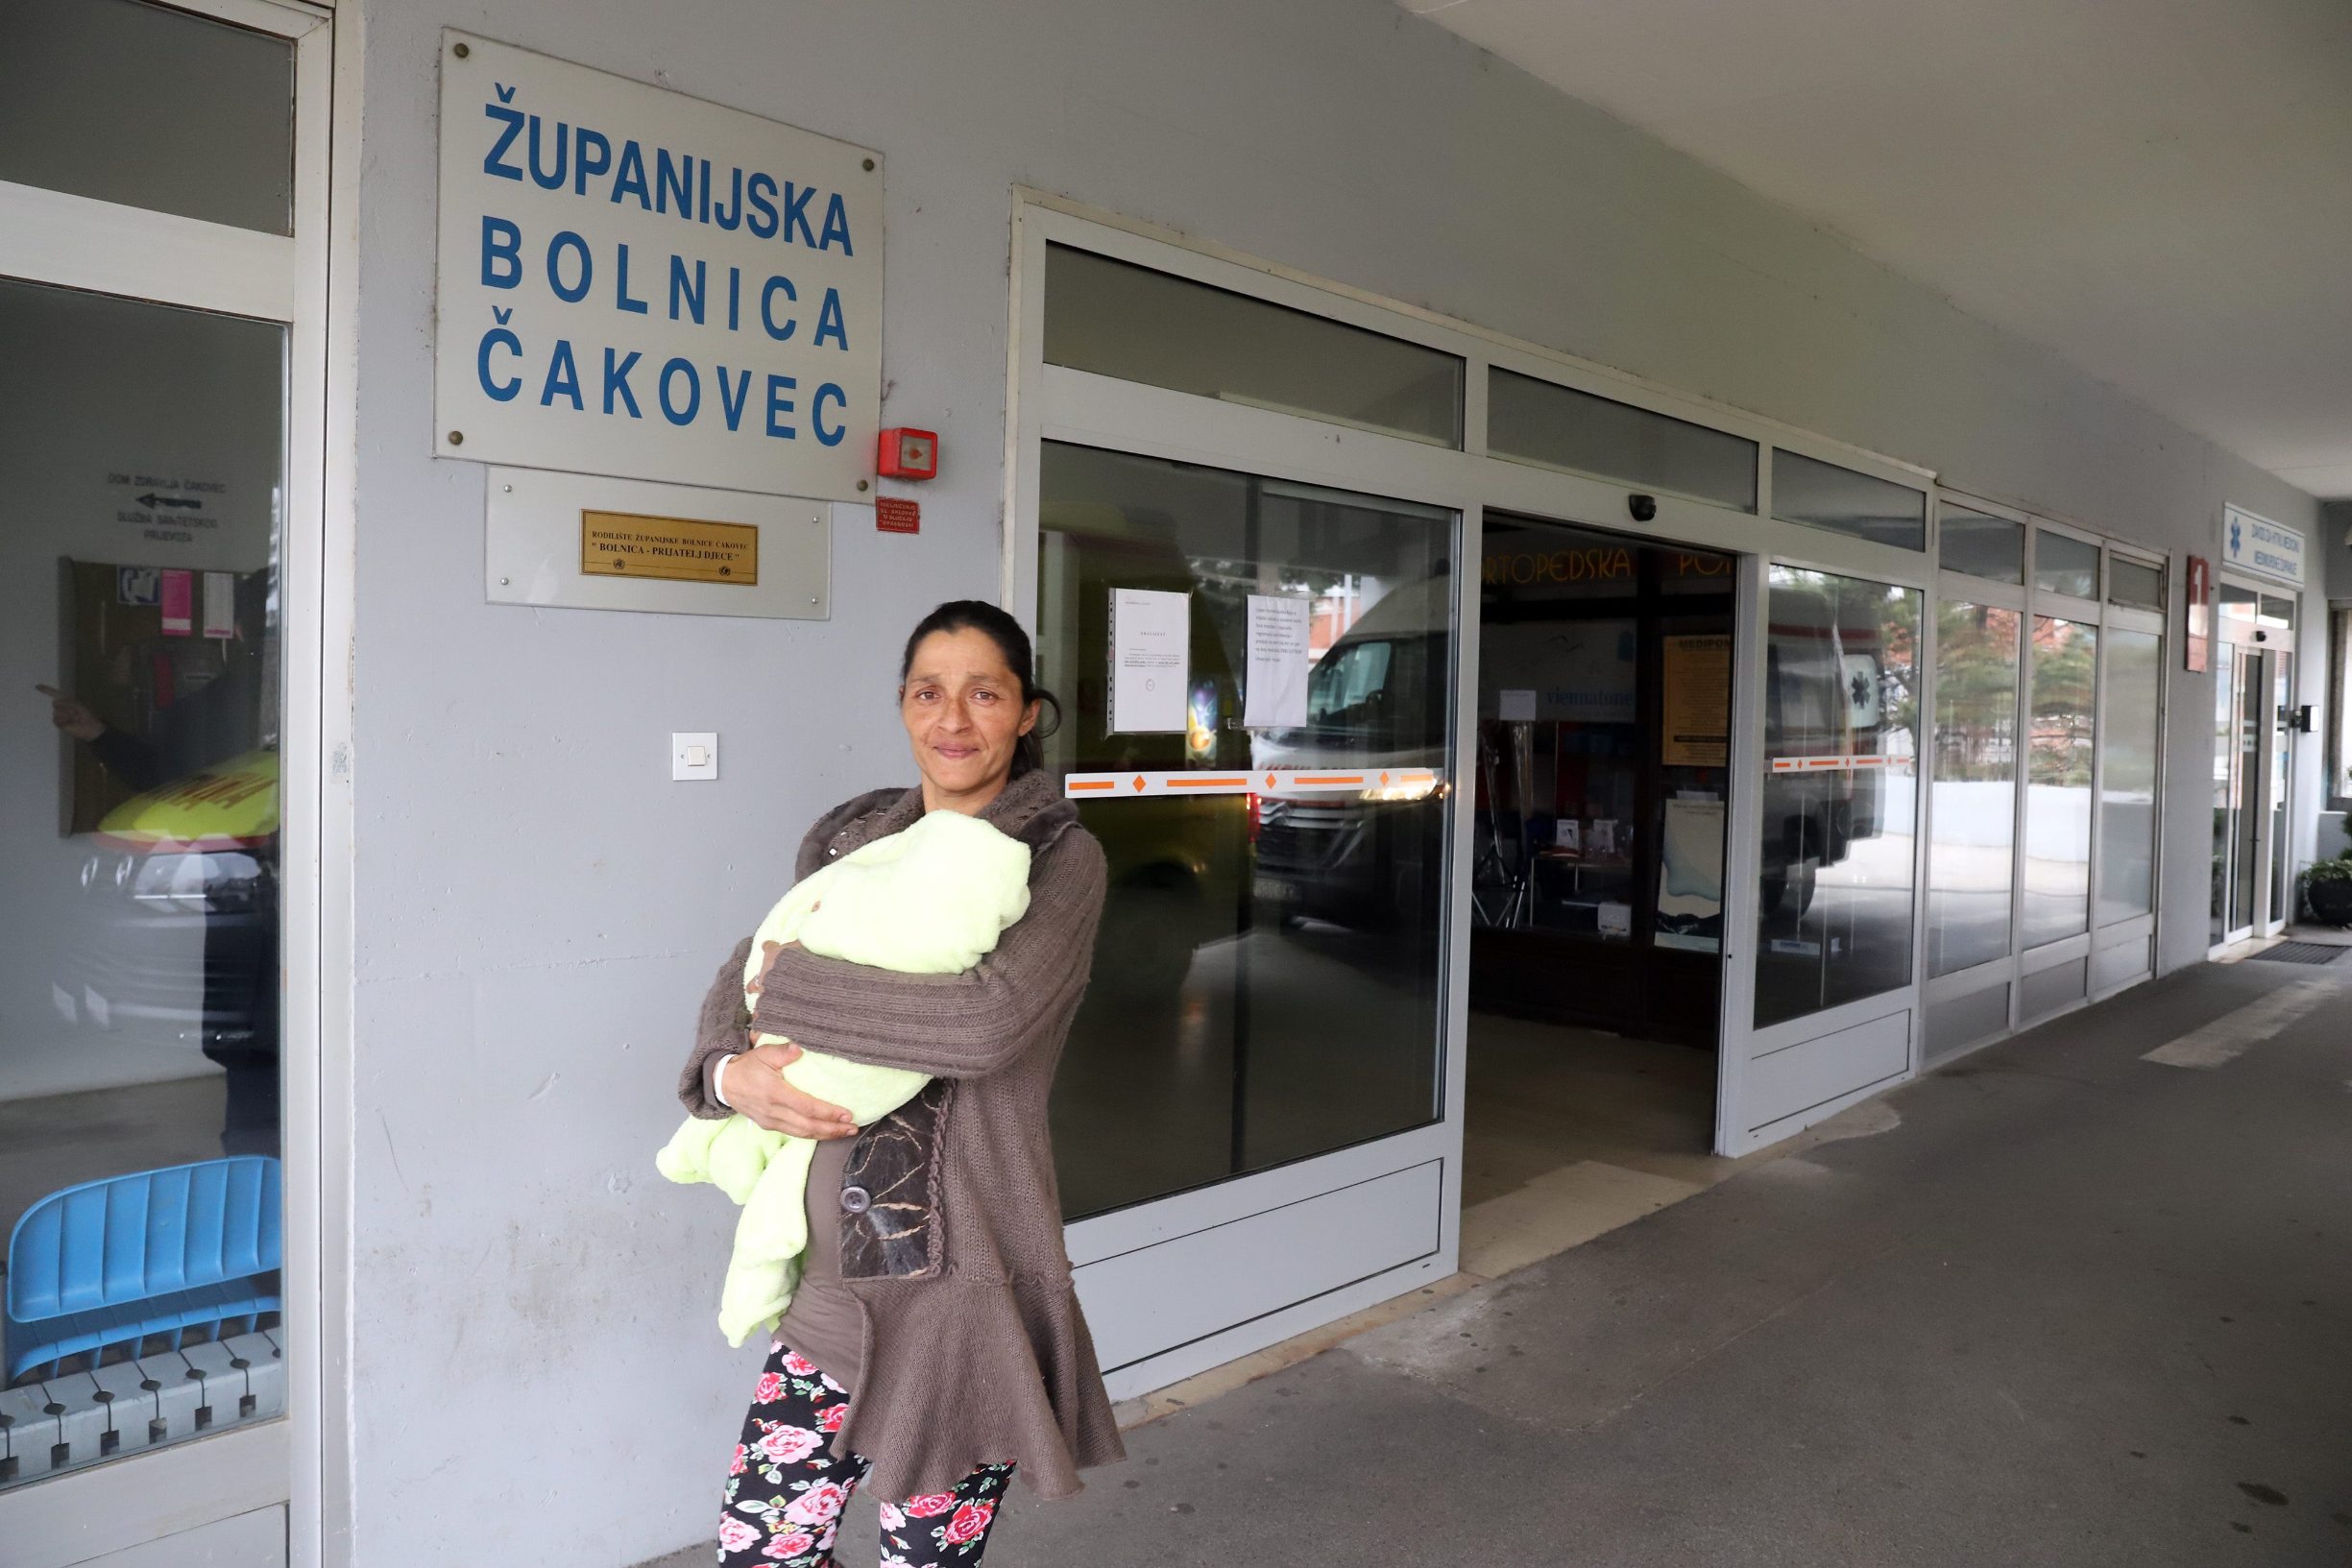 Cakovec, 040120.
Prva beba rodjena u Zupanijskoj bolnici Cakovec je Marina Orsus.
Na fotografiji: Jagoda i Marina Orsus.
Foto: Zeljko Hajdinjak / CROPIX